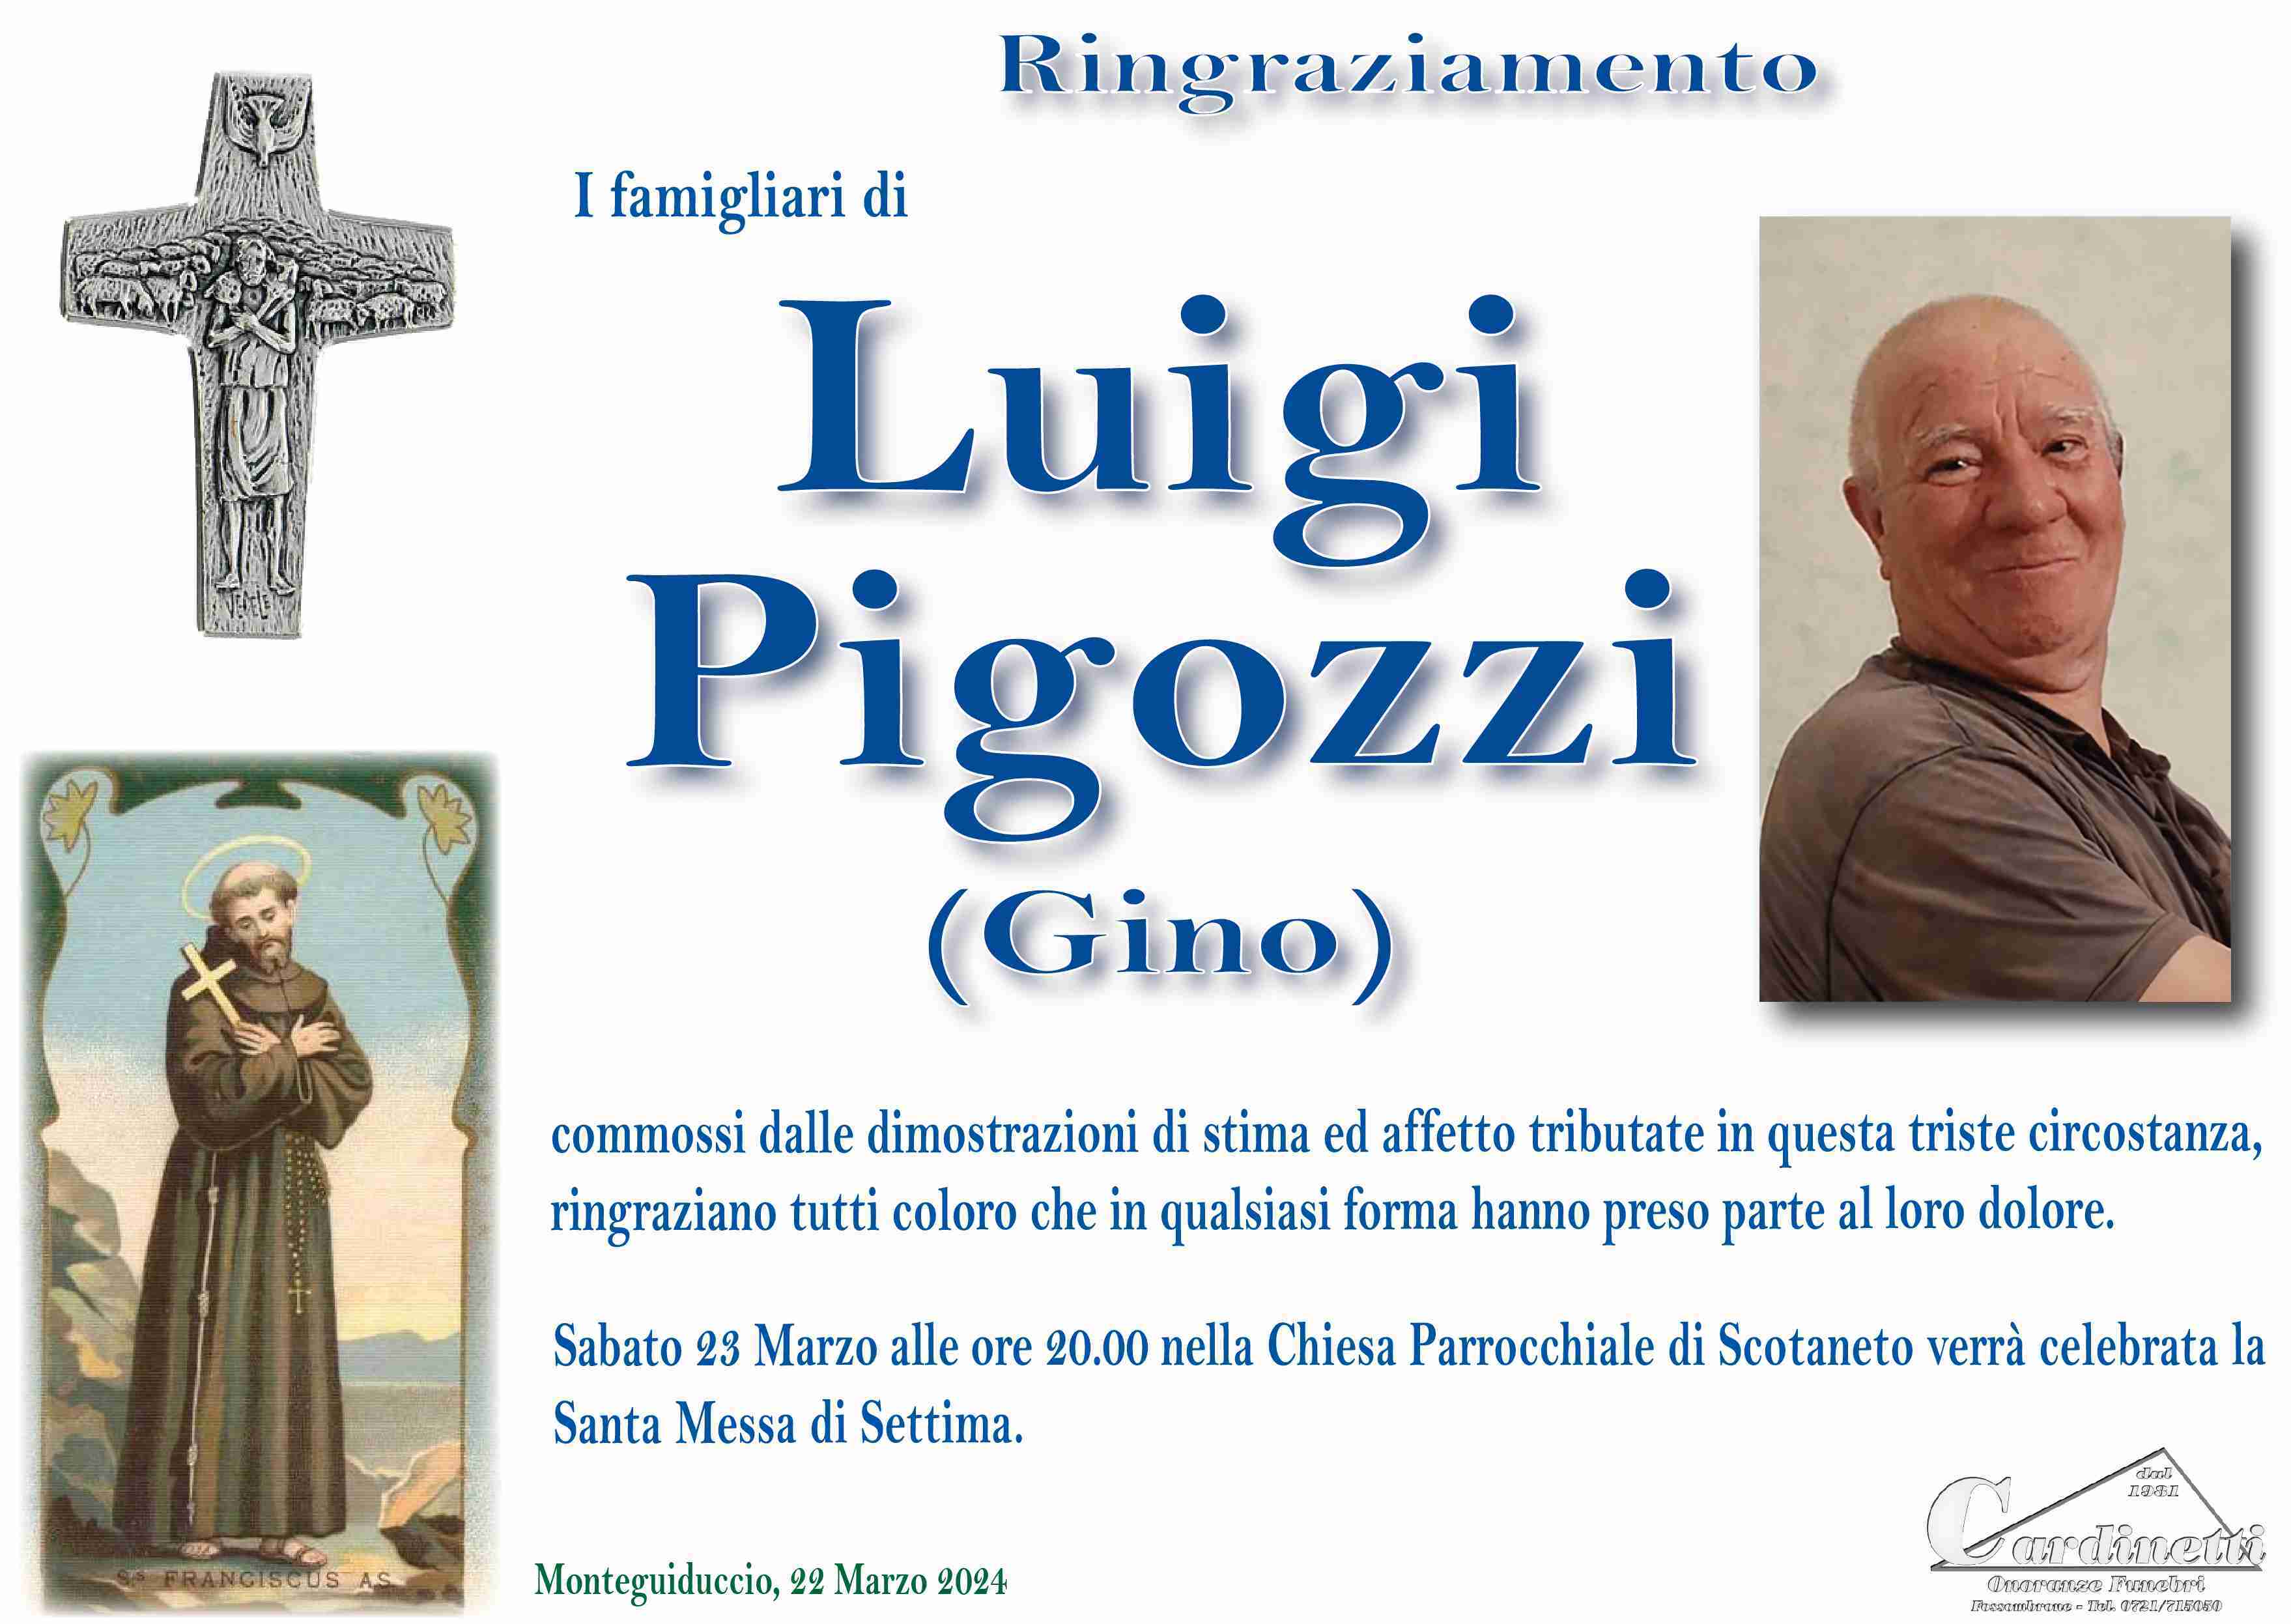 Luigi Pigozzi